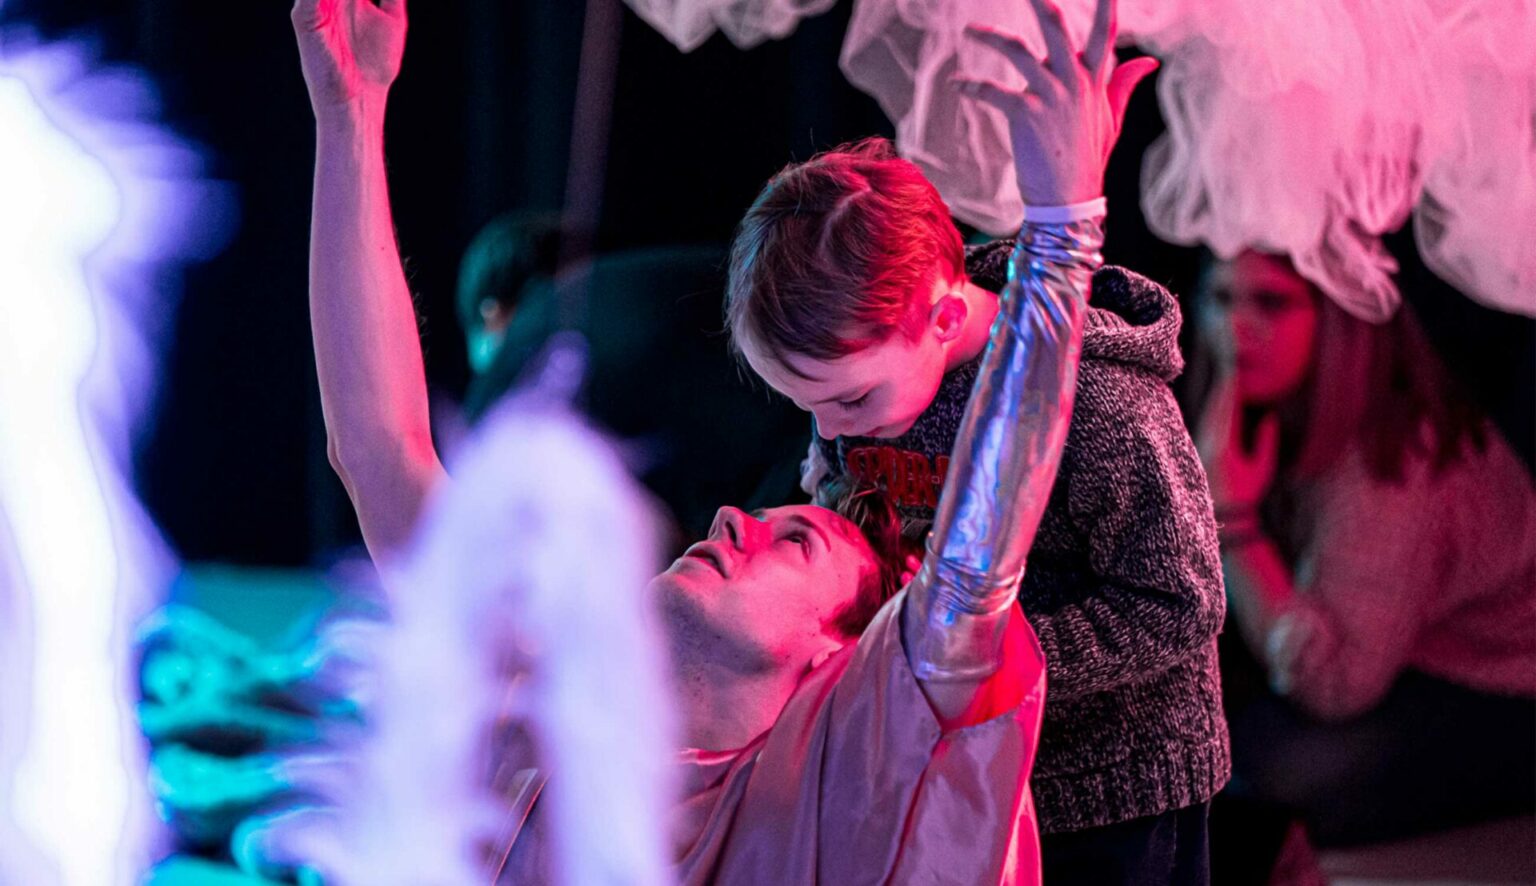 The performance “Fields of Tender” - part of Dans Baby Dans Festival 2023 at the dance theater Bora Bora.